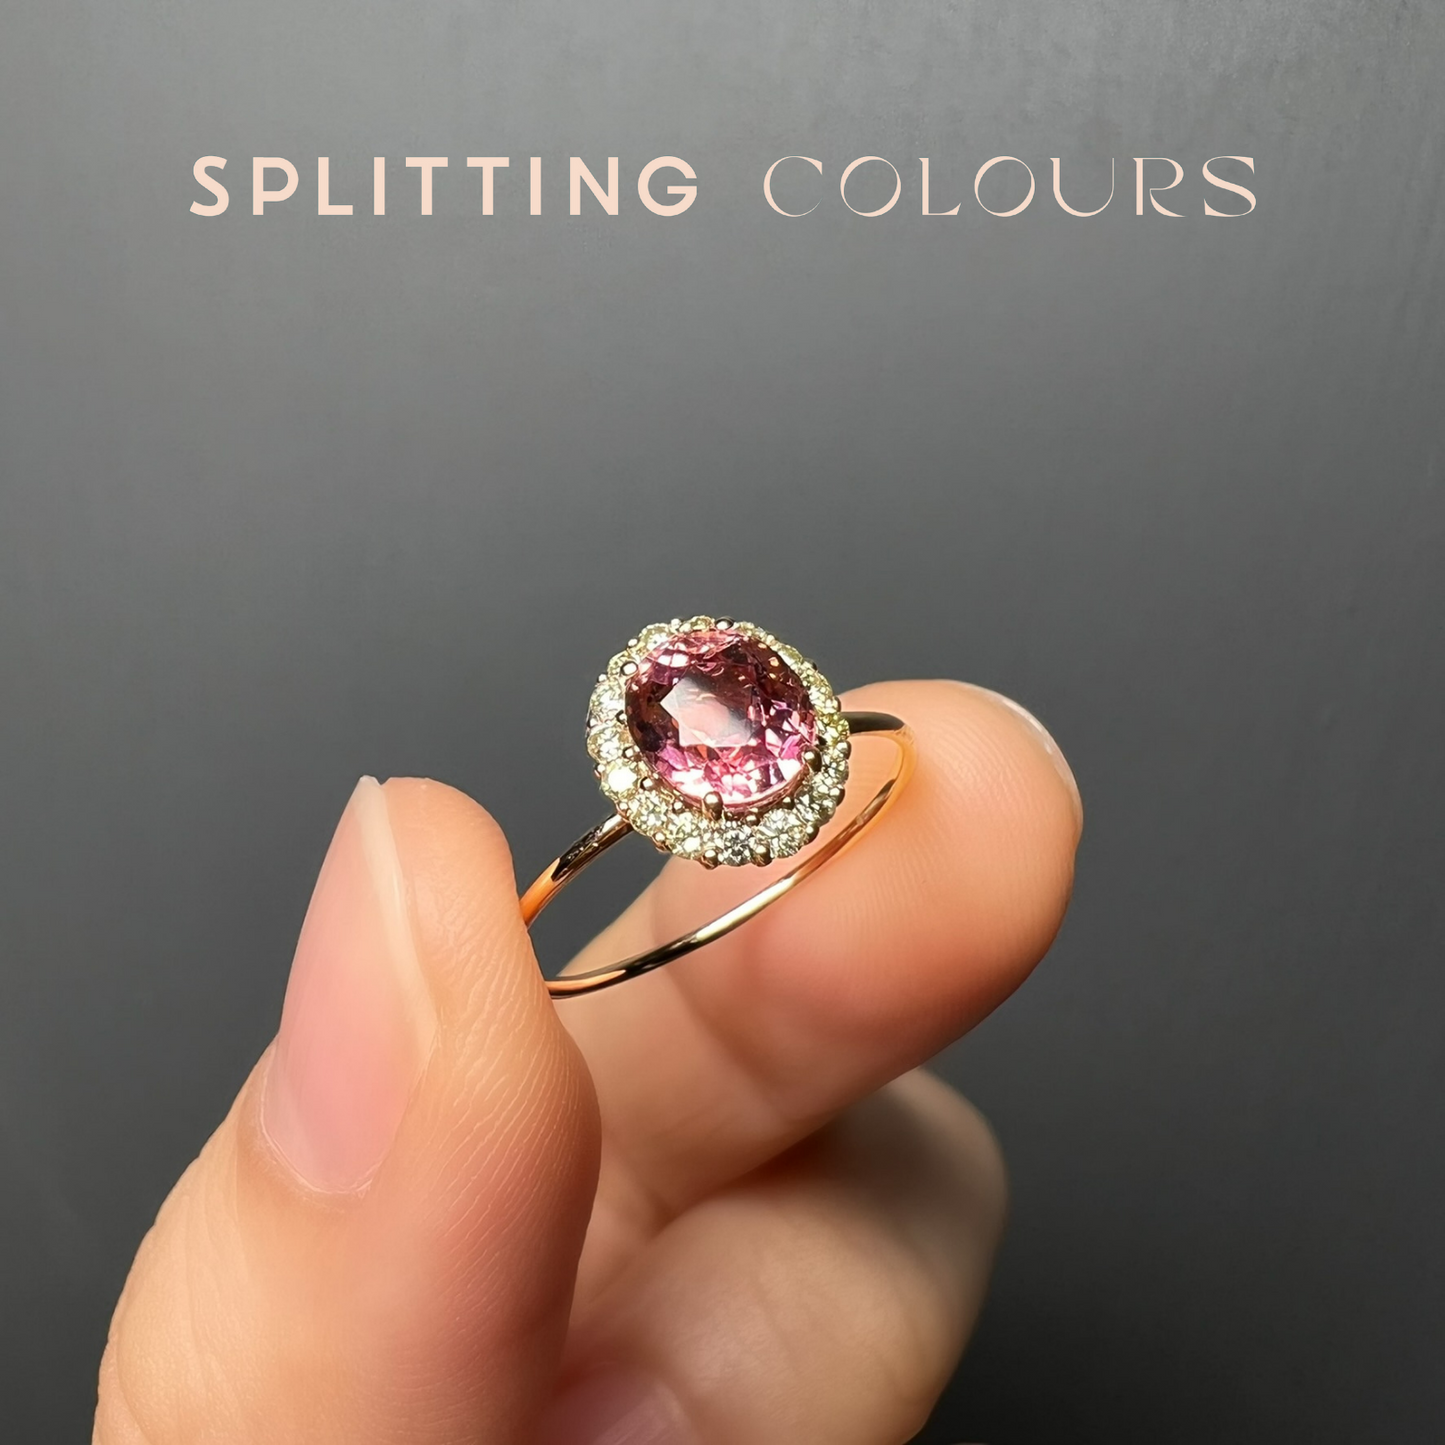 The Mono Halo Ring - 1.12ct Turkish Pink Tourmaline with Diamonds